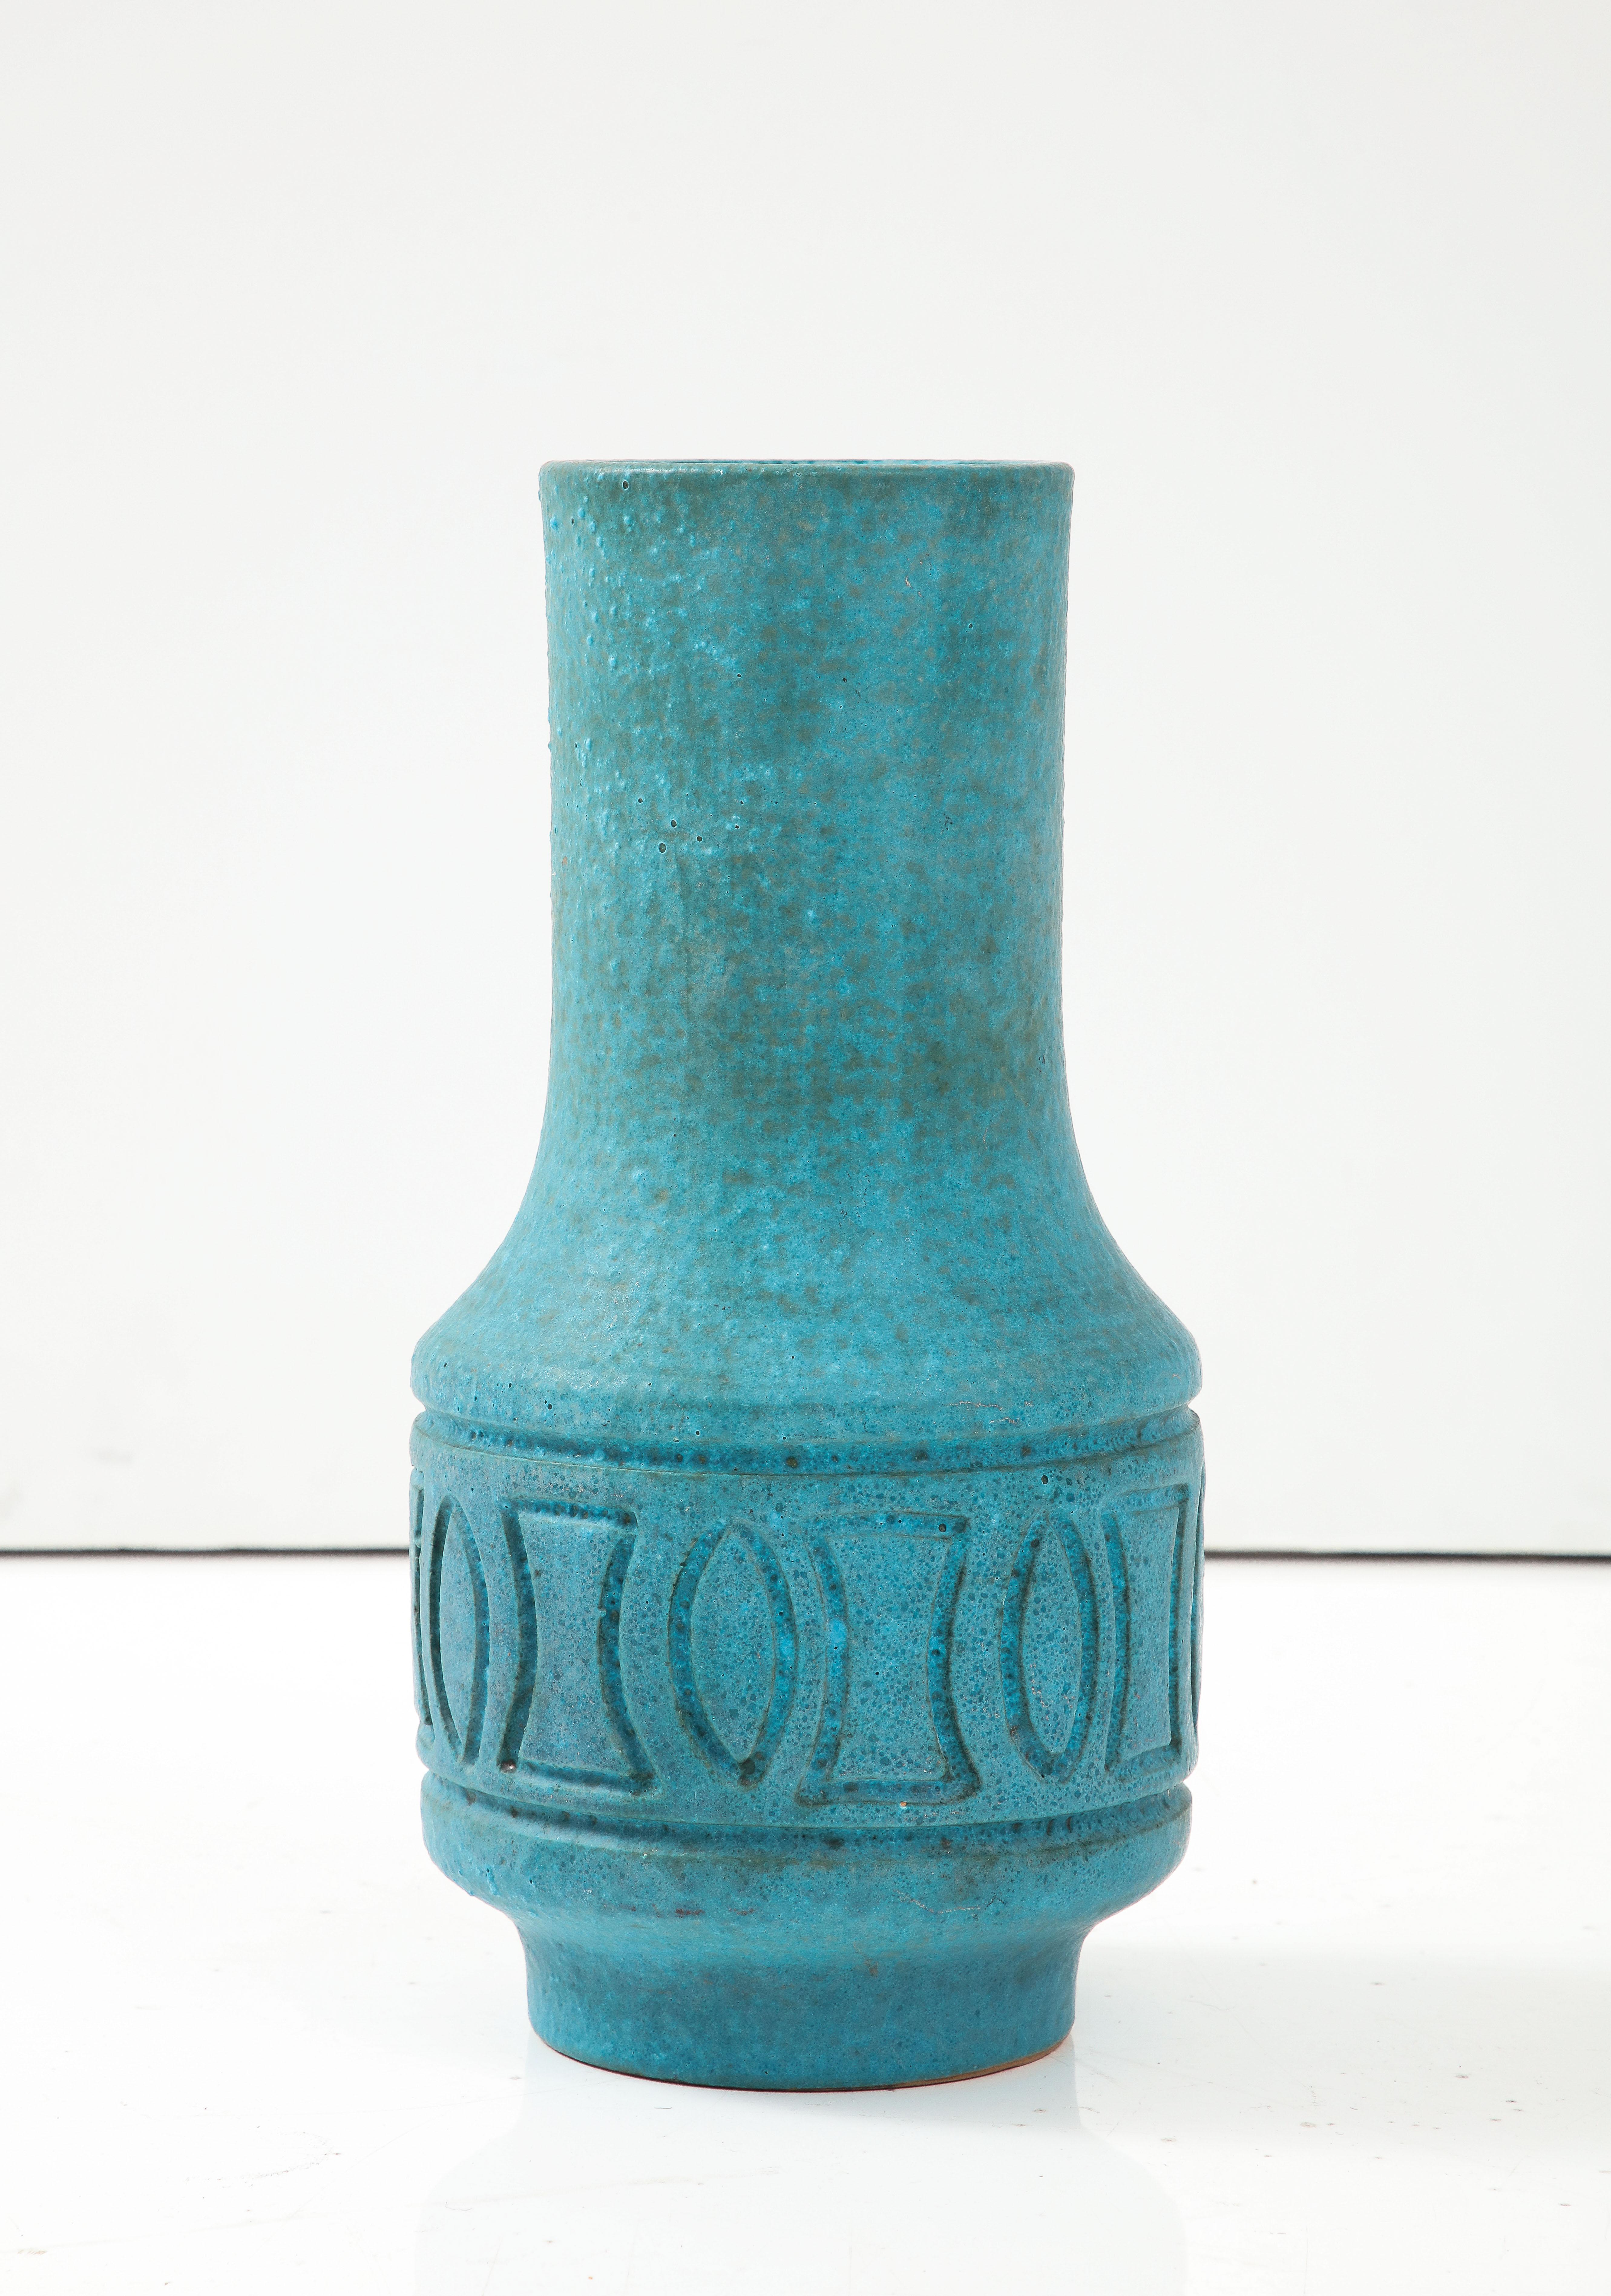 Rosenthal Netter: Moderne Vase aus Keramik, 1970er Jahre (Töpferwaren) im Angebot